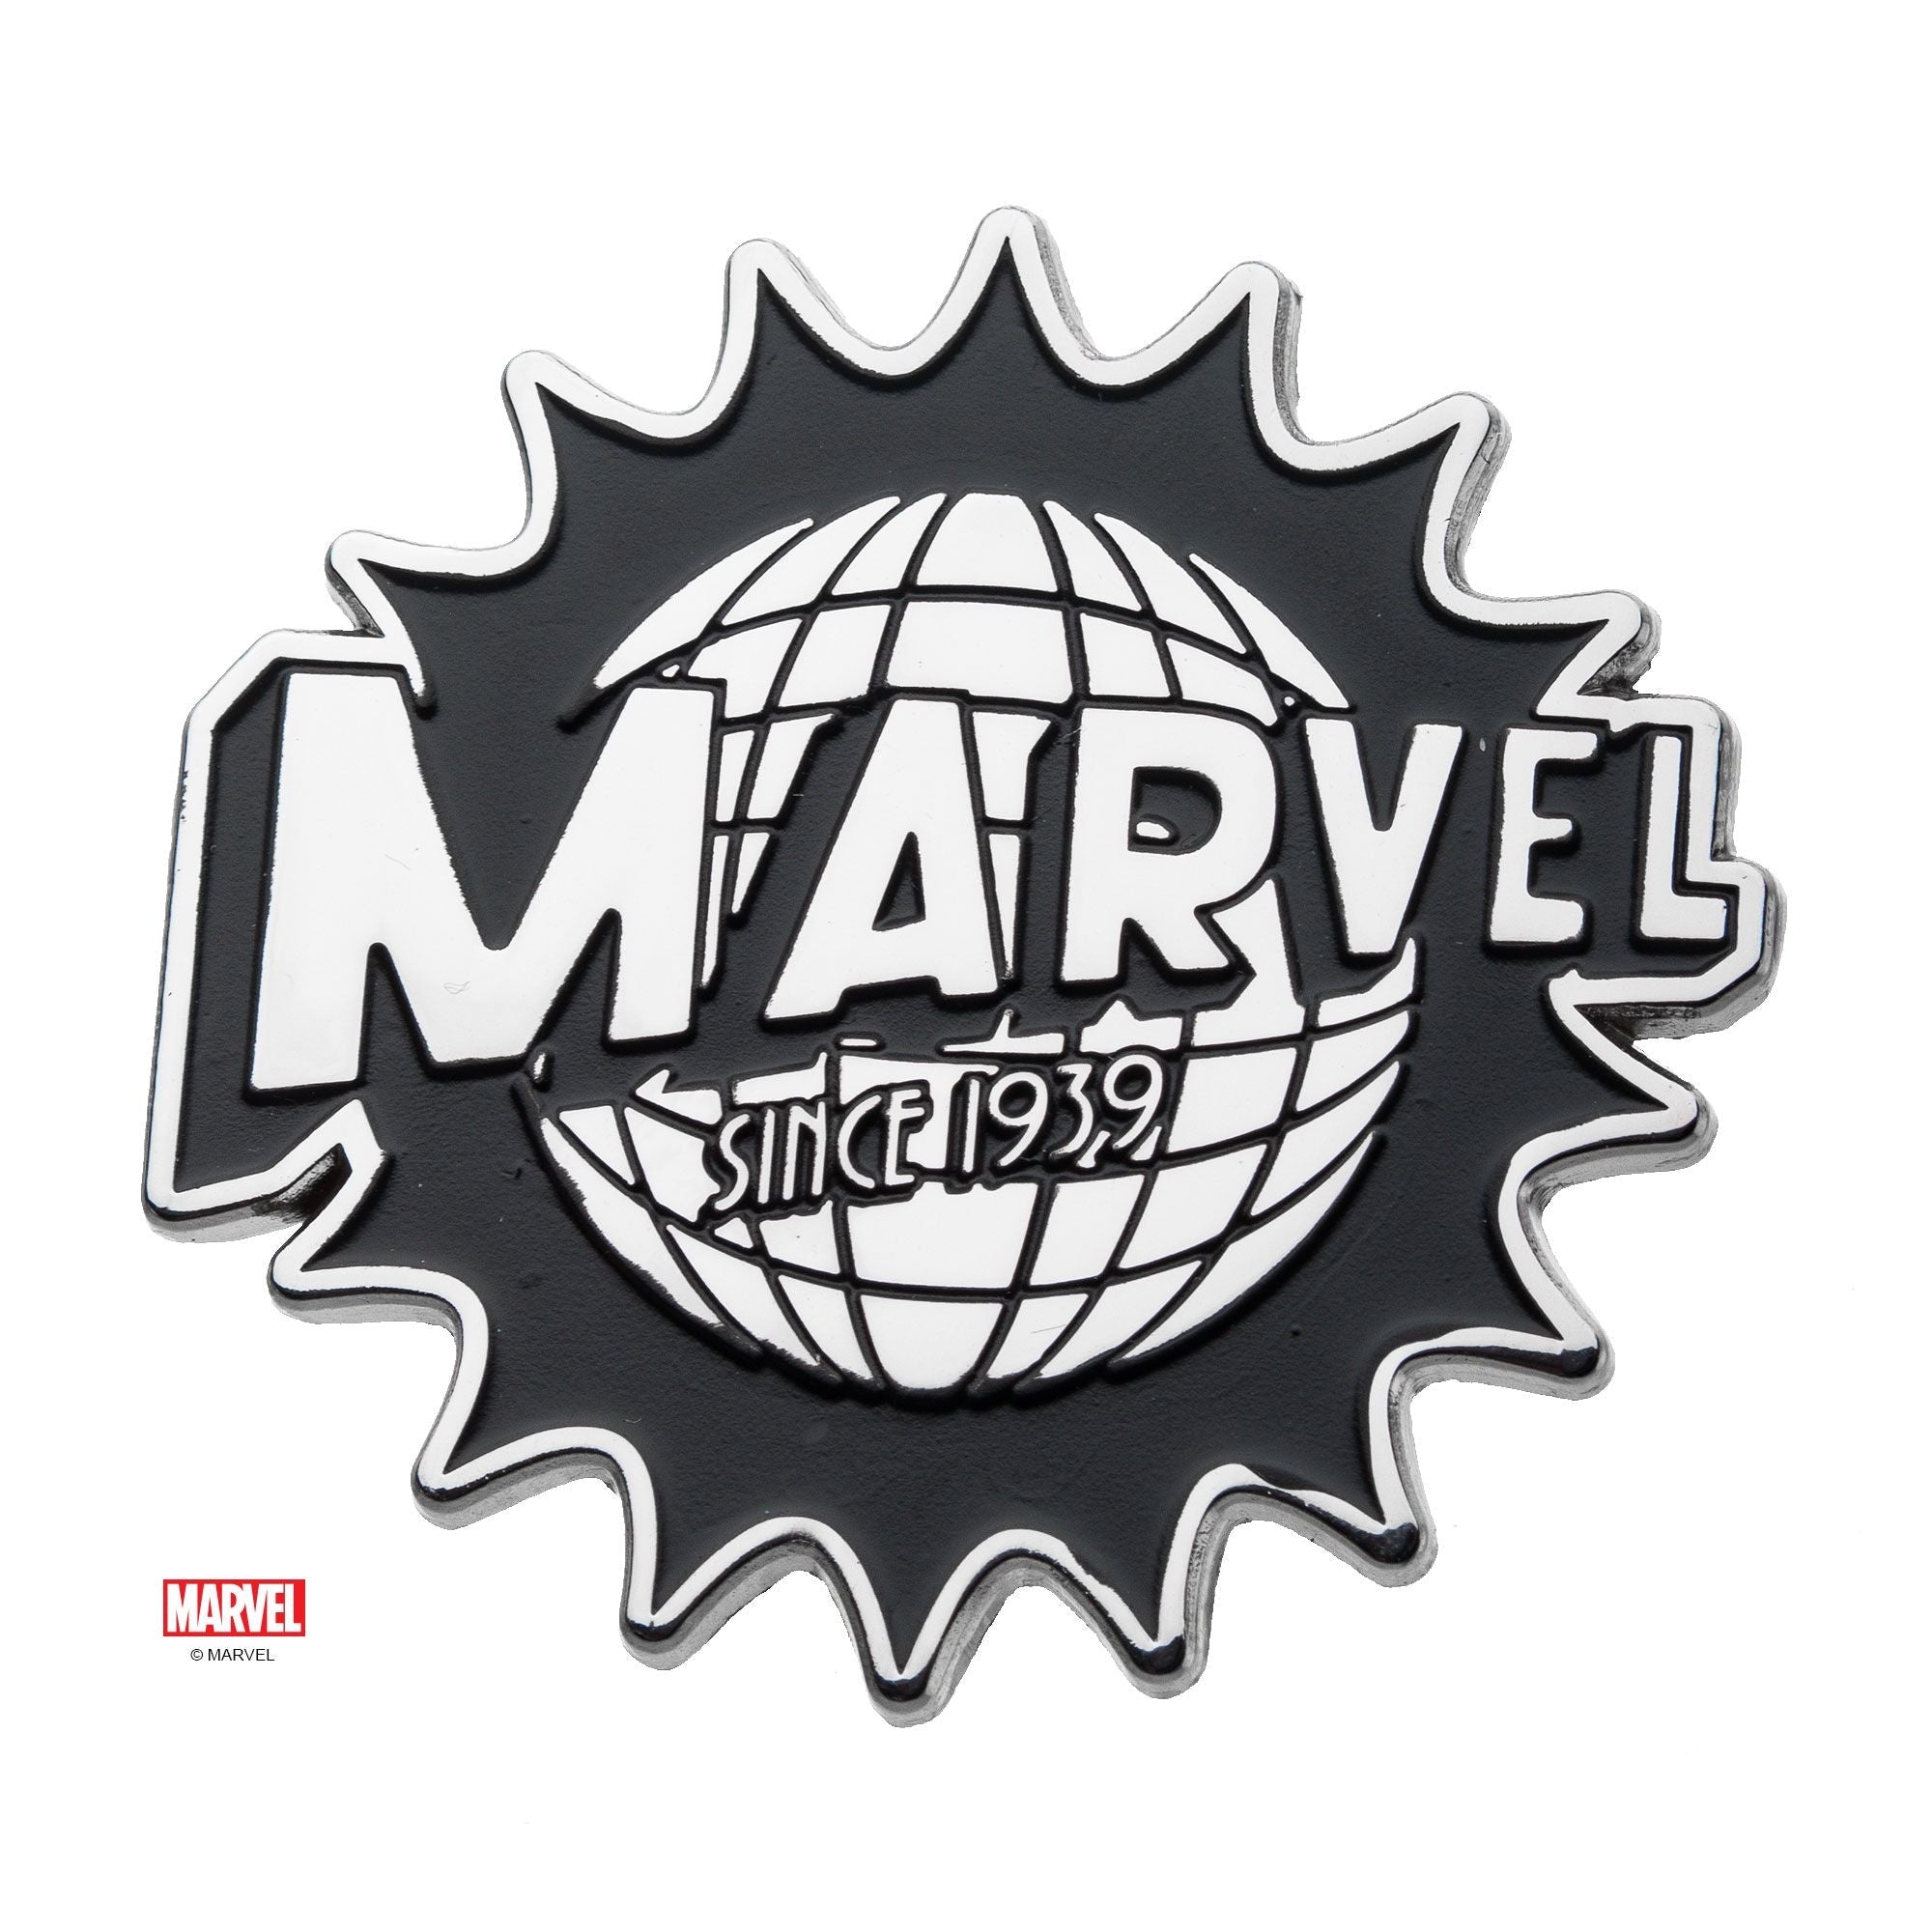 MARVEL Marvel Since 1939 Logo Enamel Pin -Rebel Bod-RebelBod